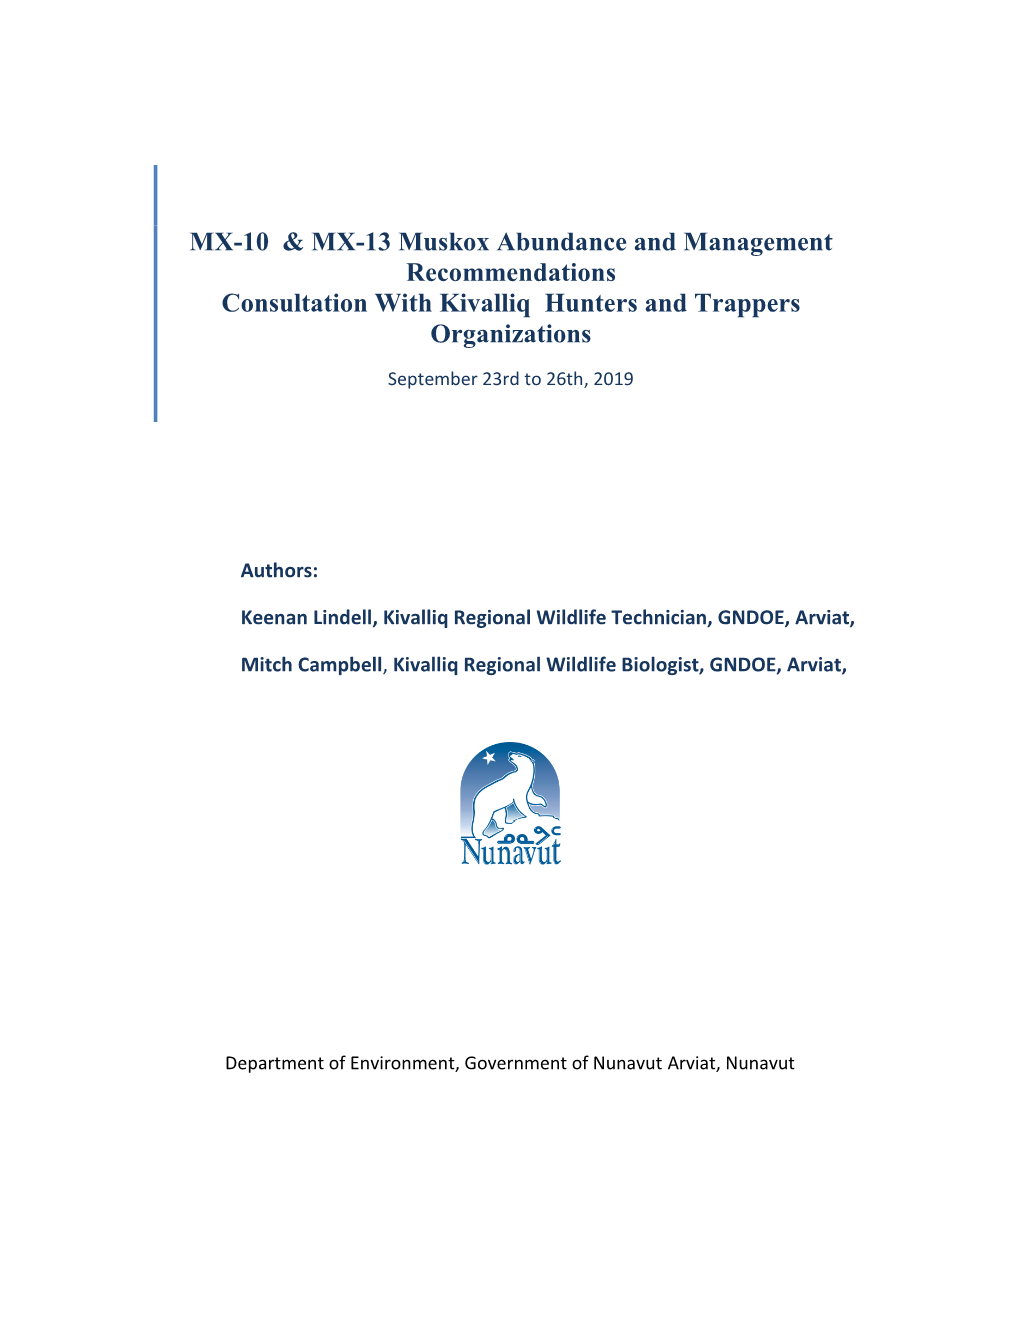 MX-10 & MX-13 Muskox Abundance and Management Recommendations